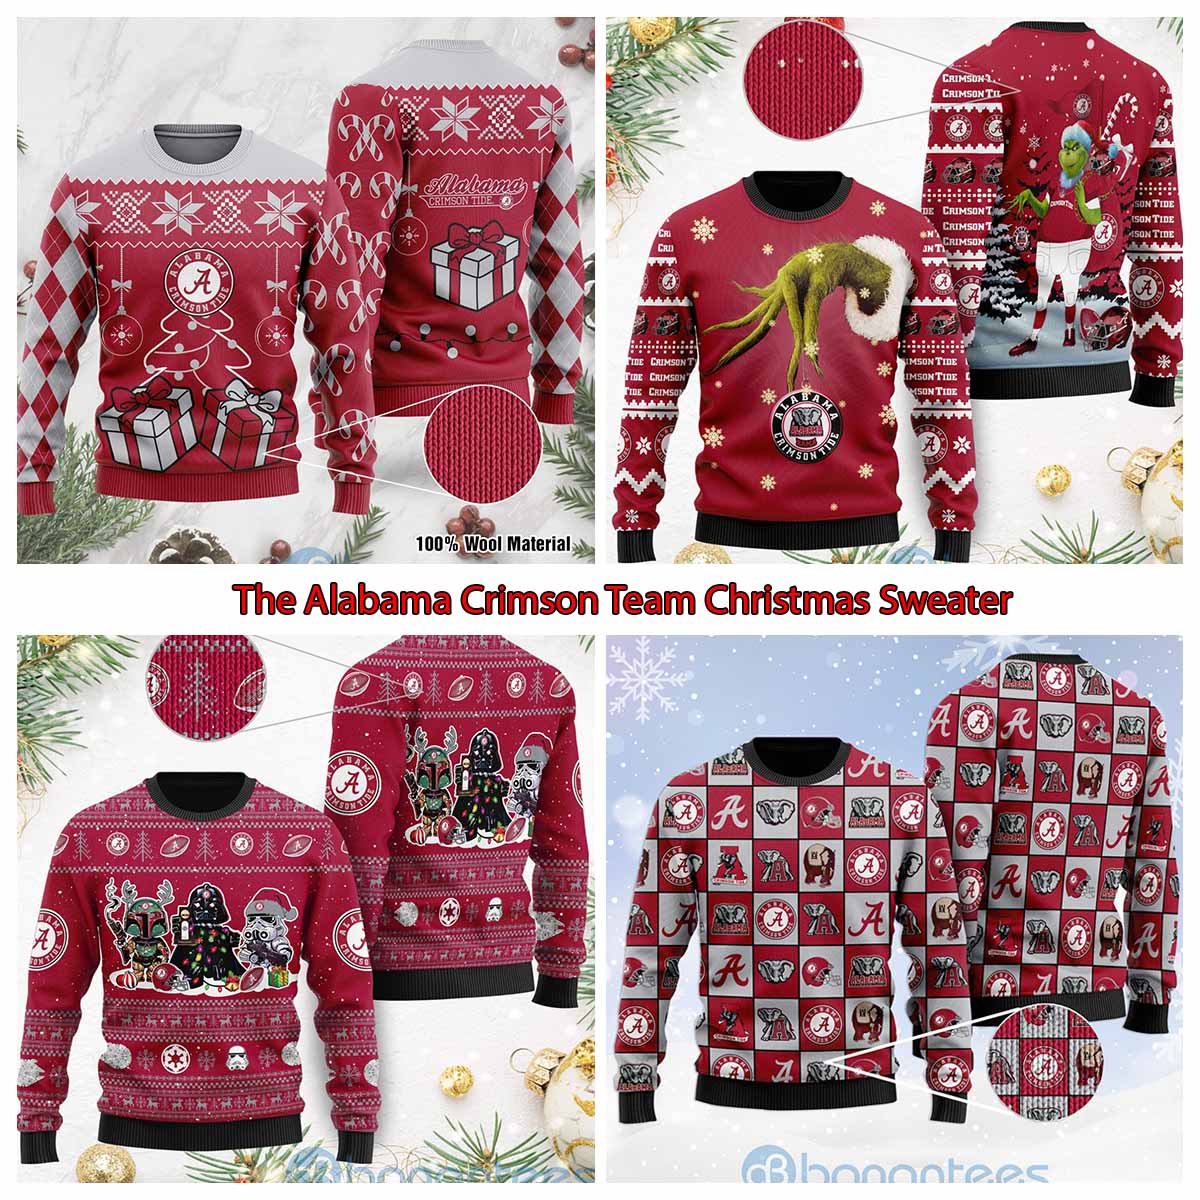 The Alabama Crimson Team Christmas Sweater